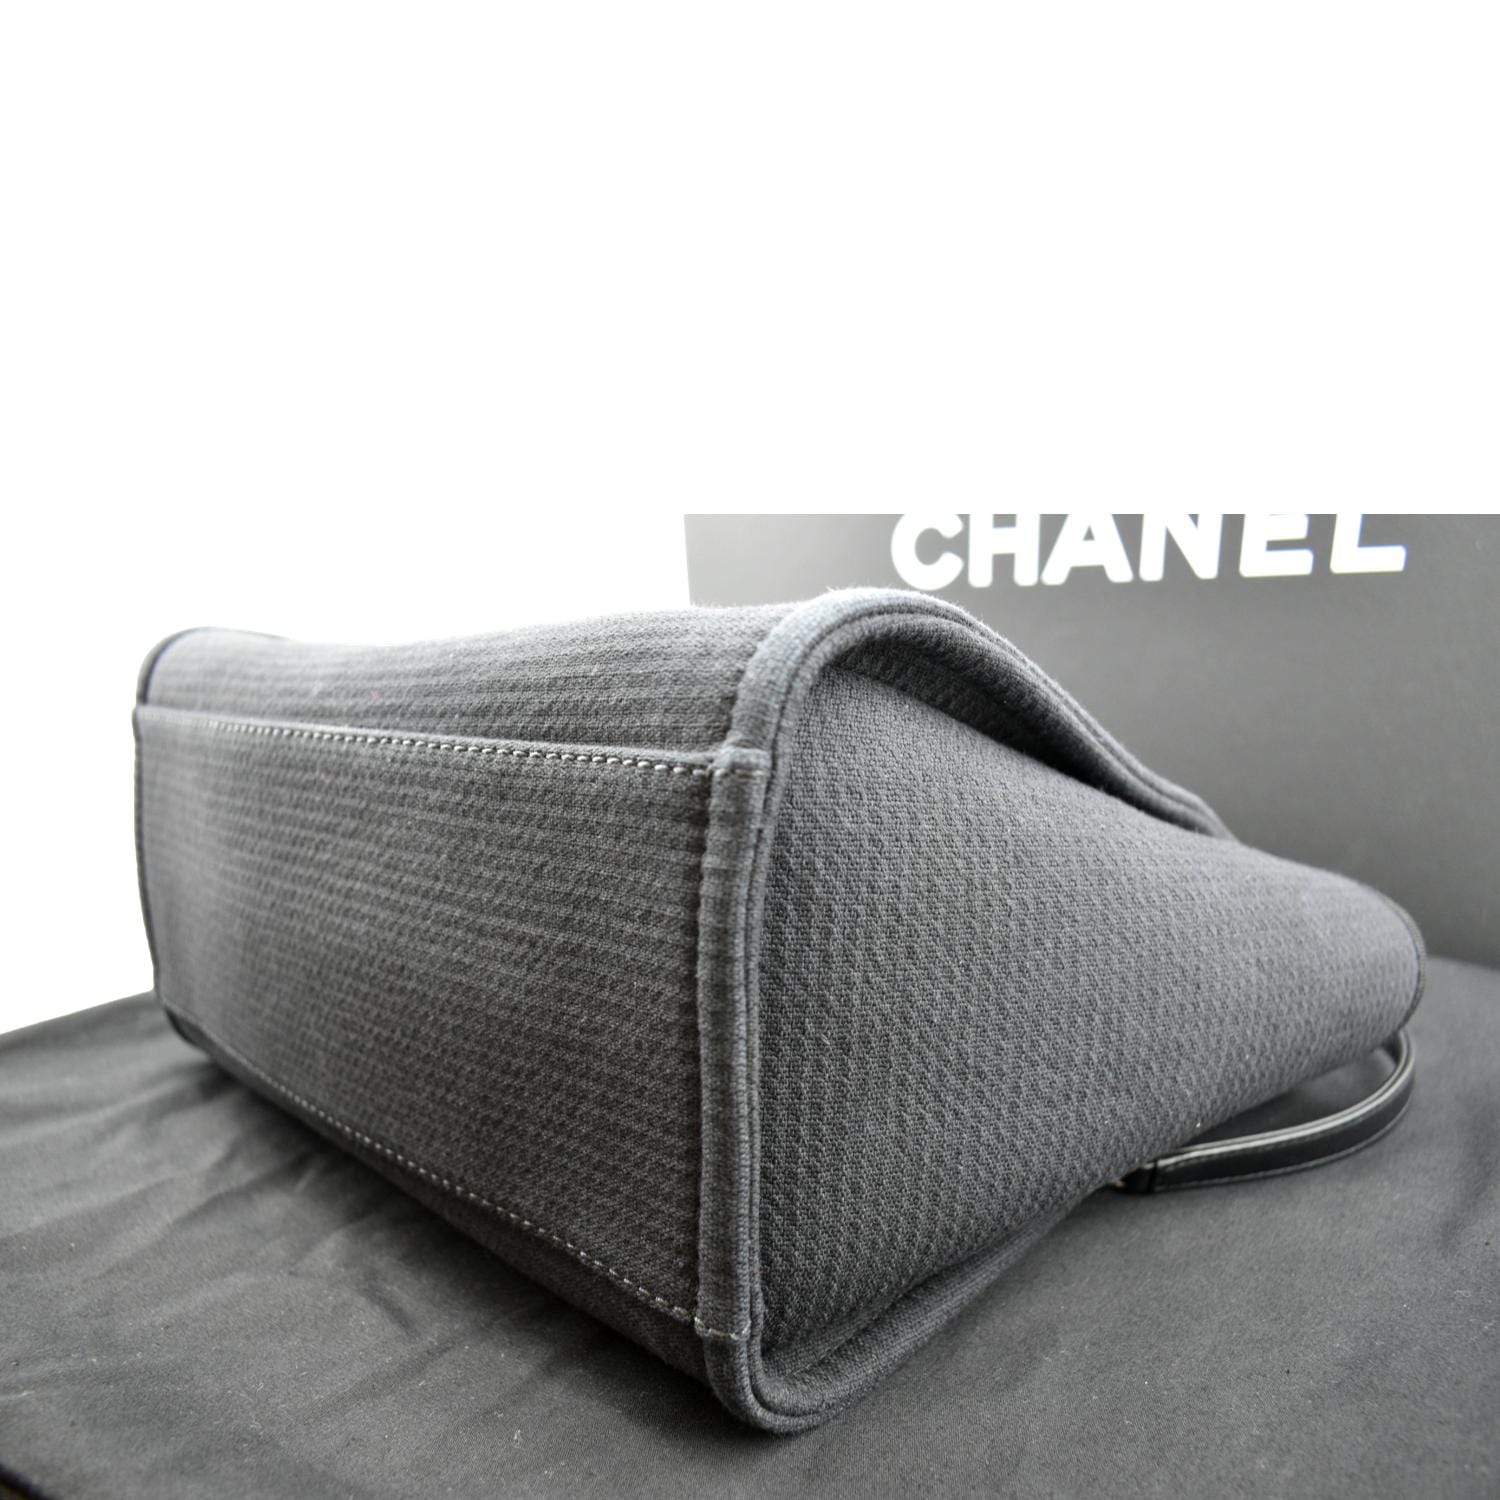 Chanel Vintage White Logo Black Canvas Tote Bag